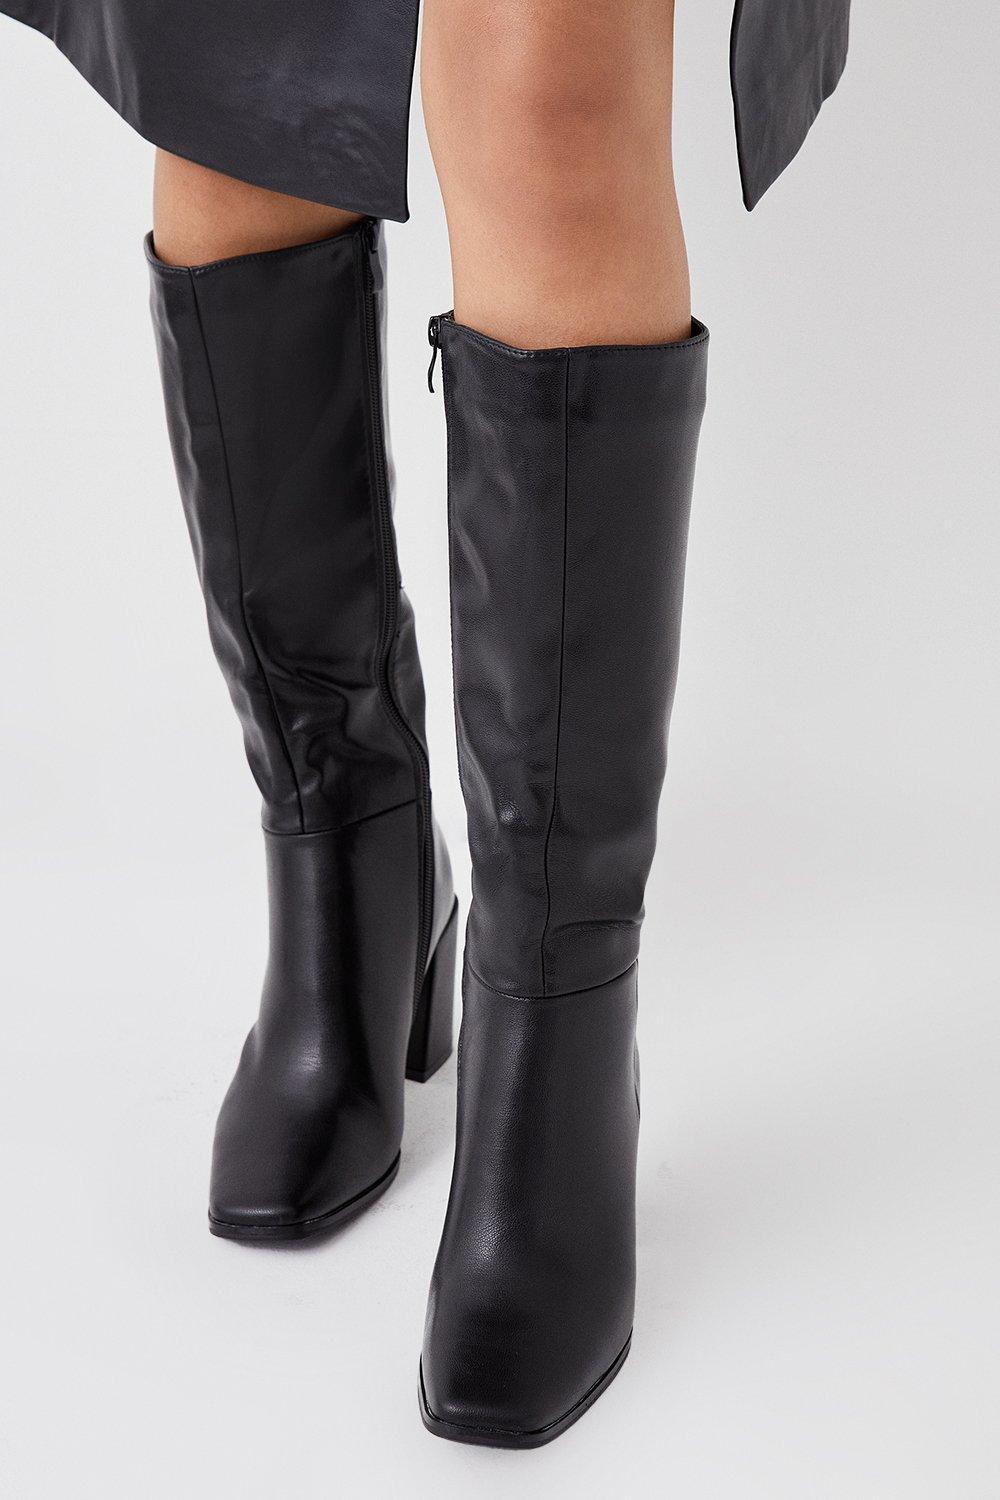 Women’s Kristen Square Toe Clean Knee High Boots - black - 7